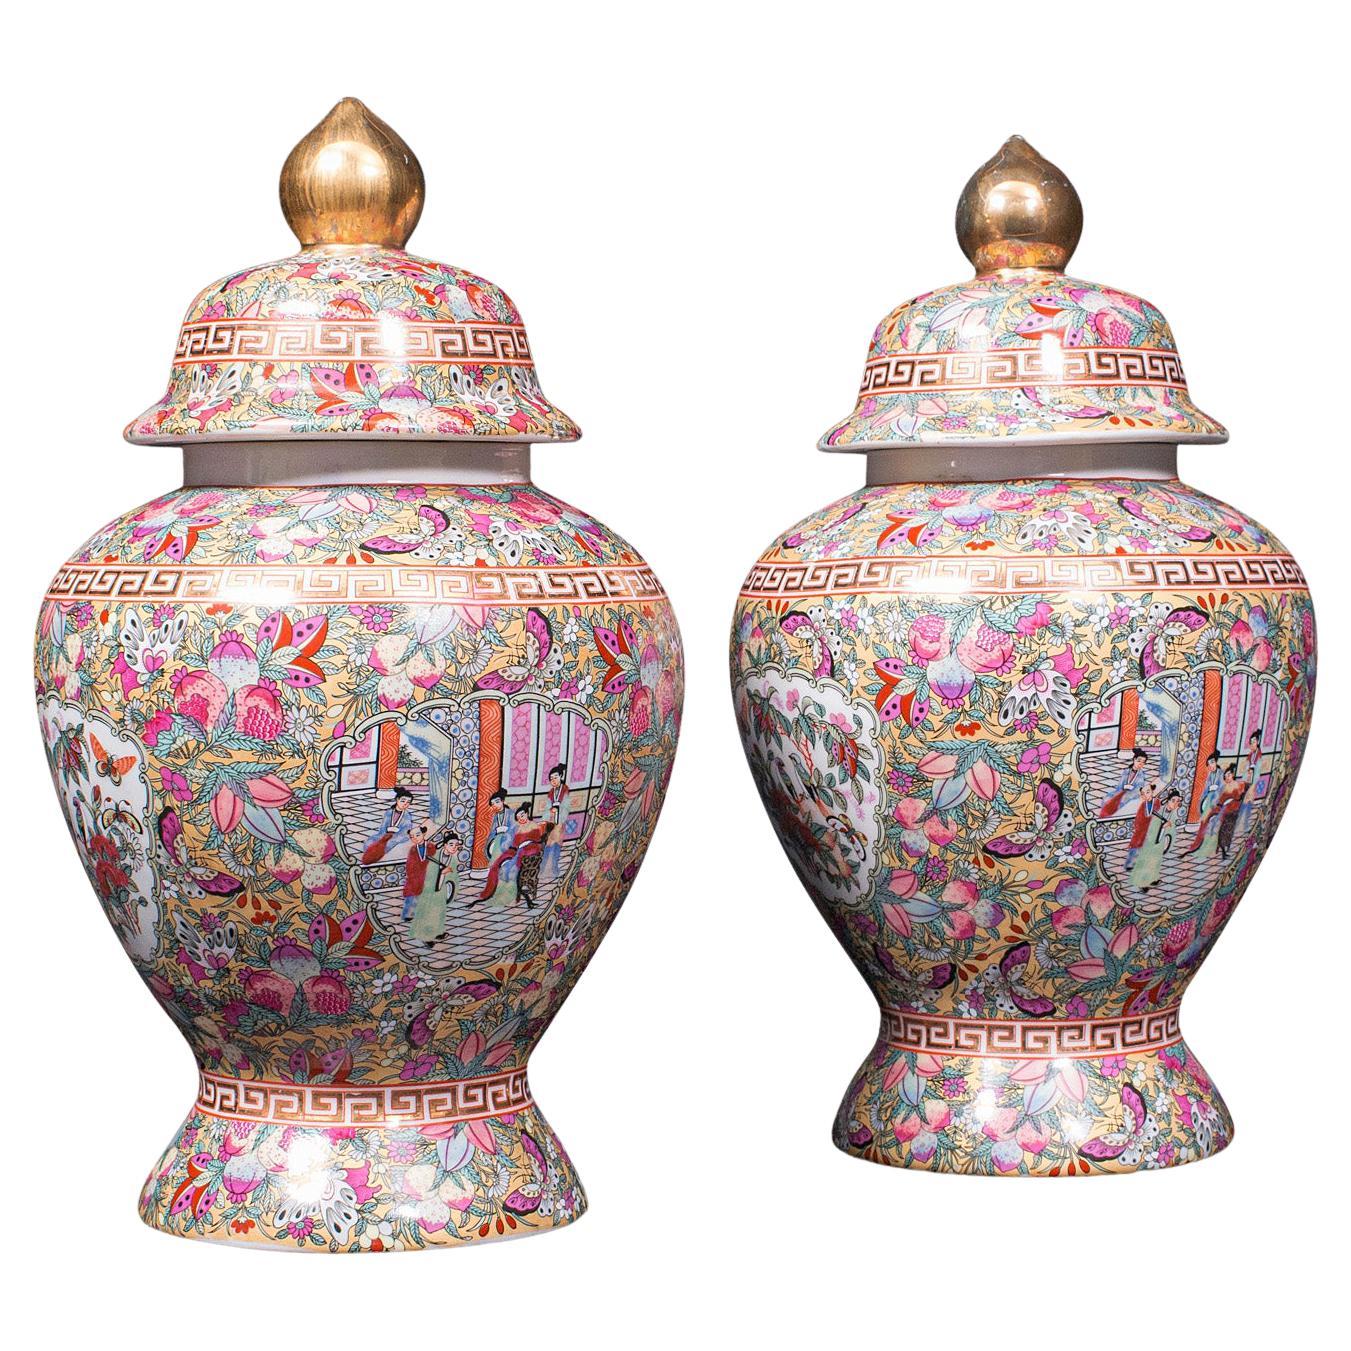 20th Century Poreclain Decorative Baluster Spice Jars - A Pair